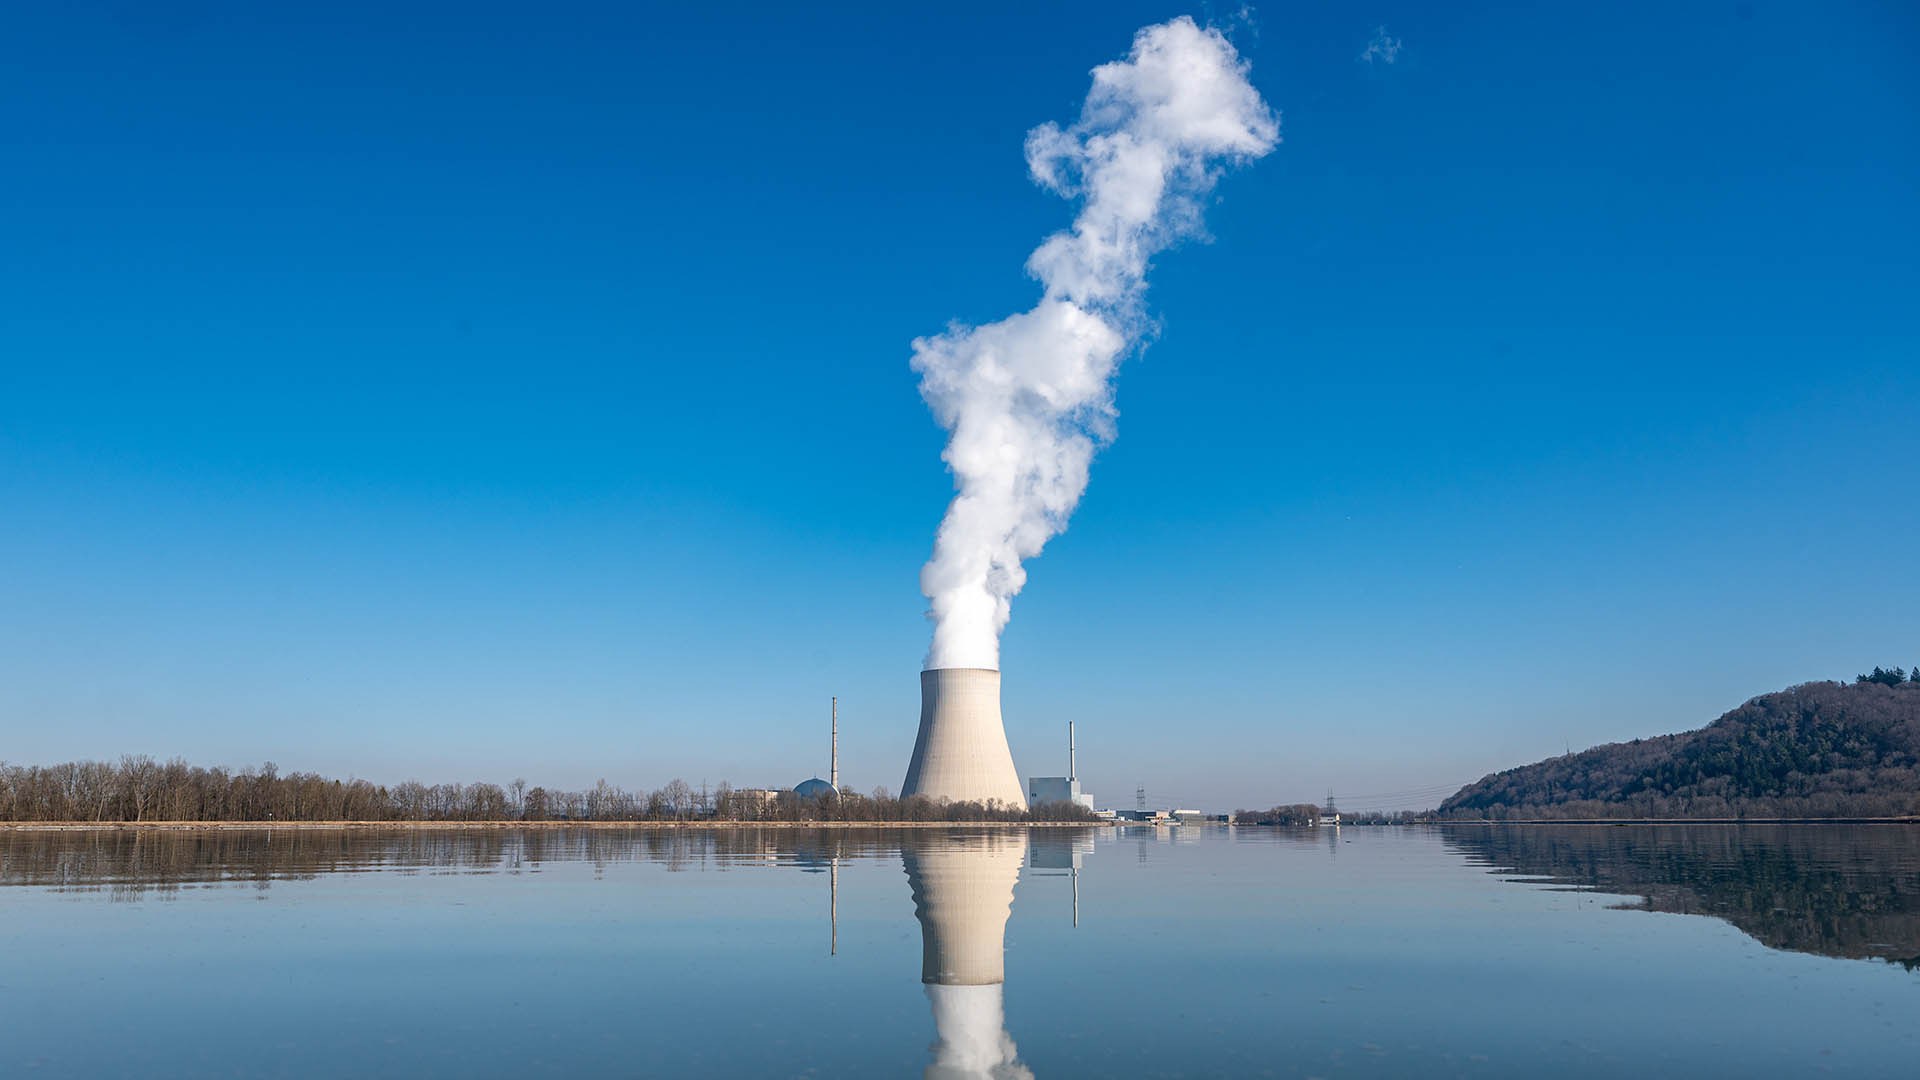 Wasserdampf steigt aus dem Kühlturm vom Atomkraftwerk Isar 2. | dpa